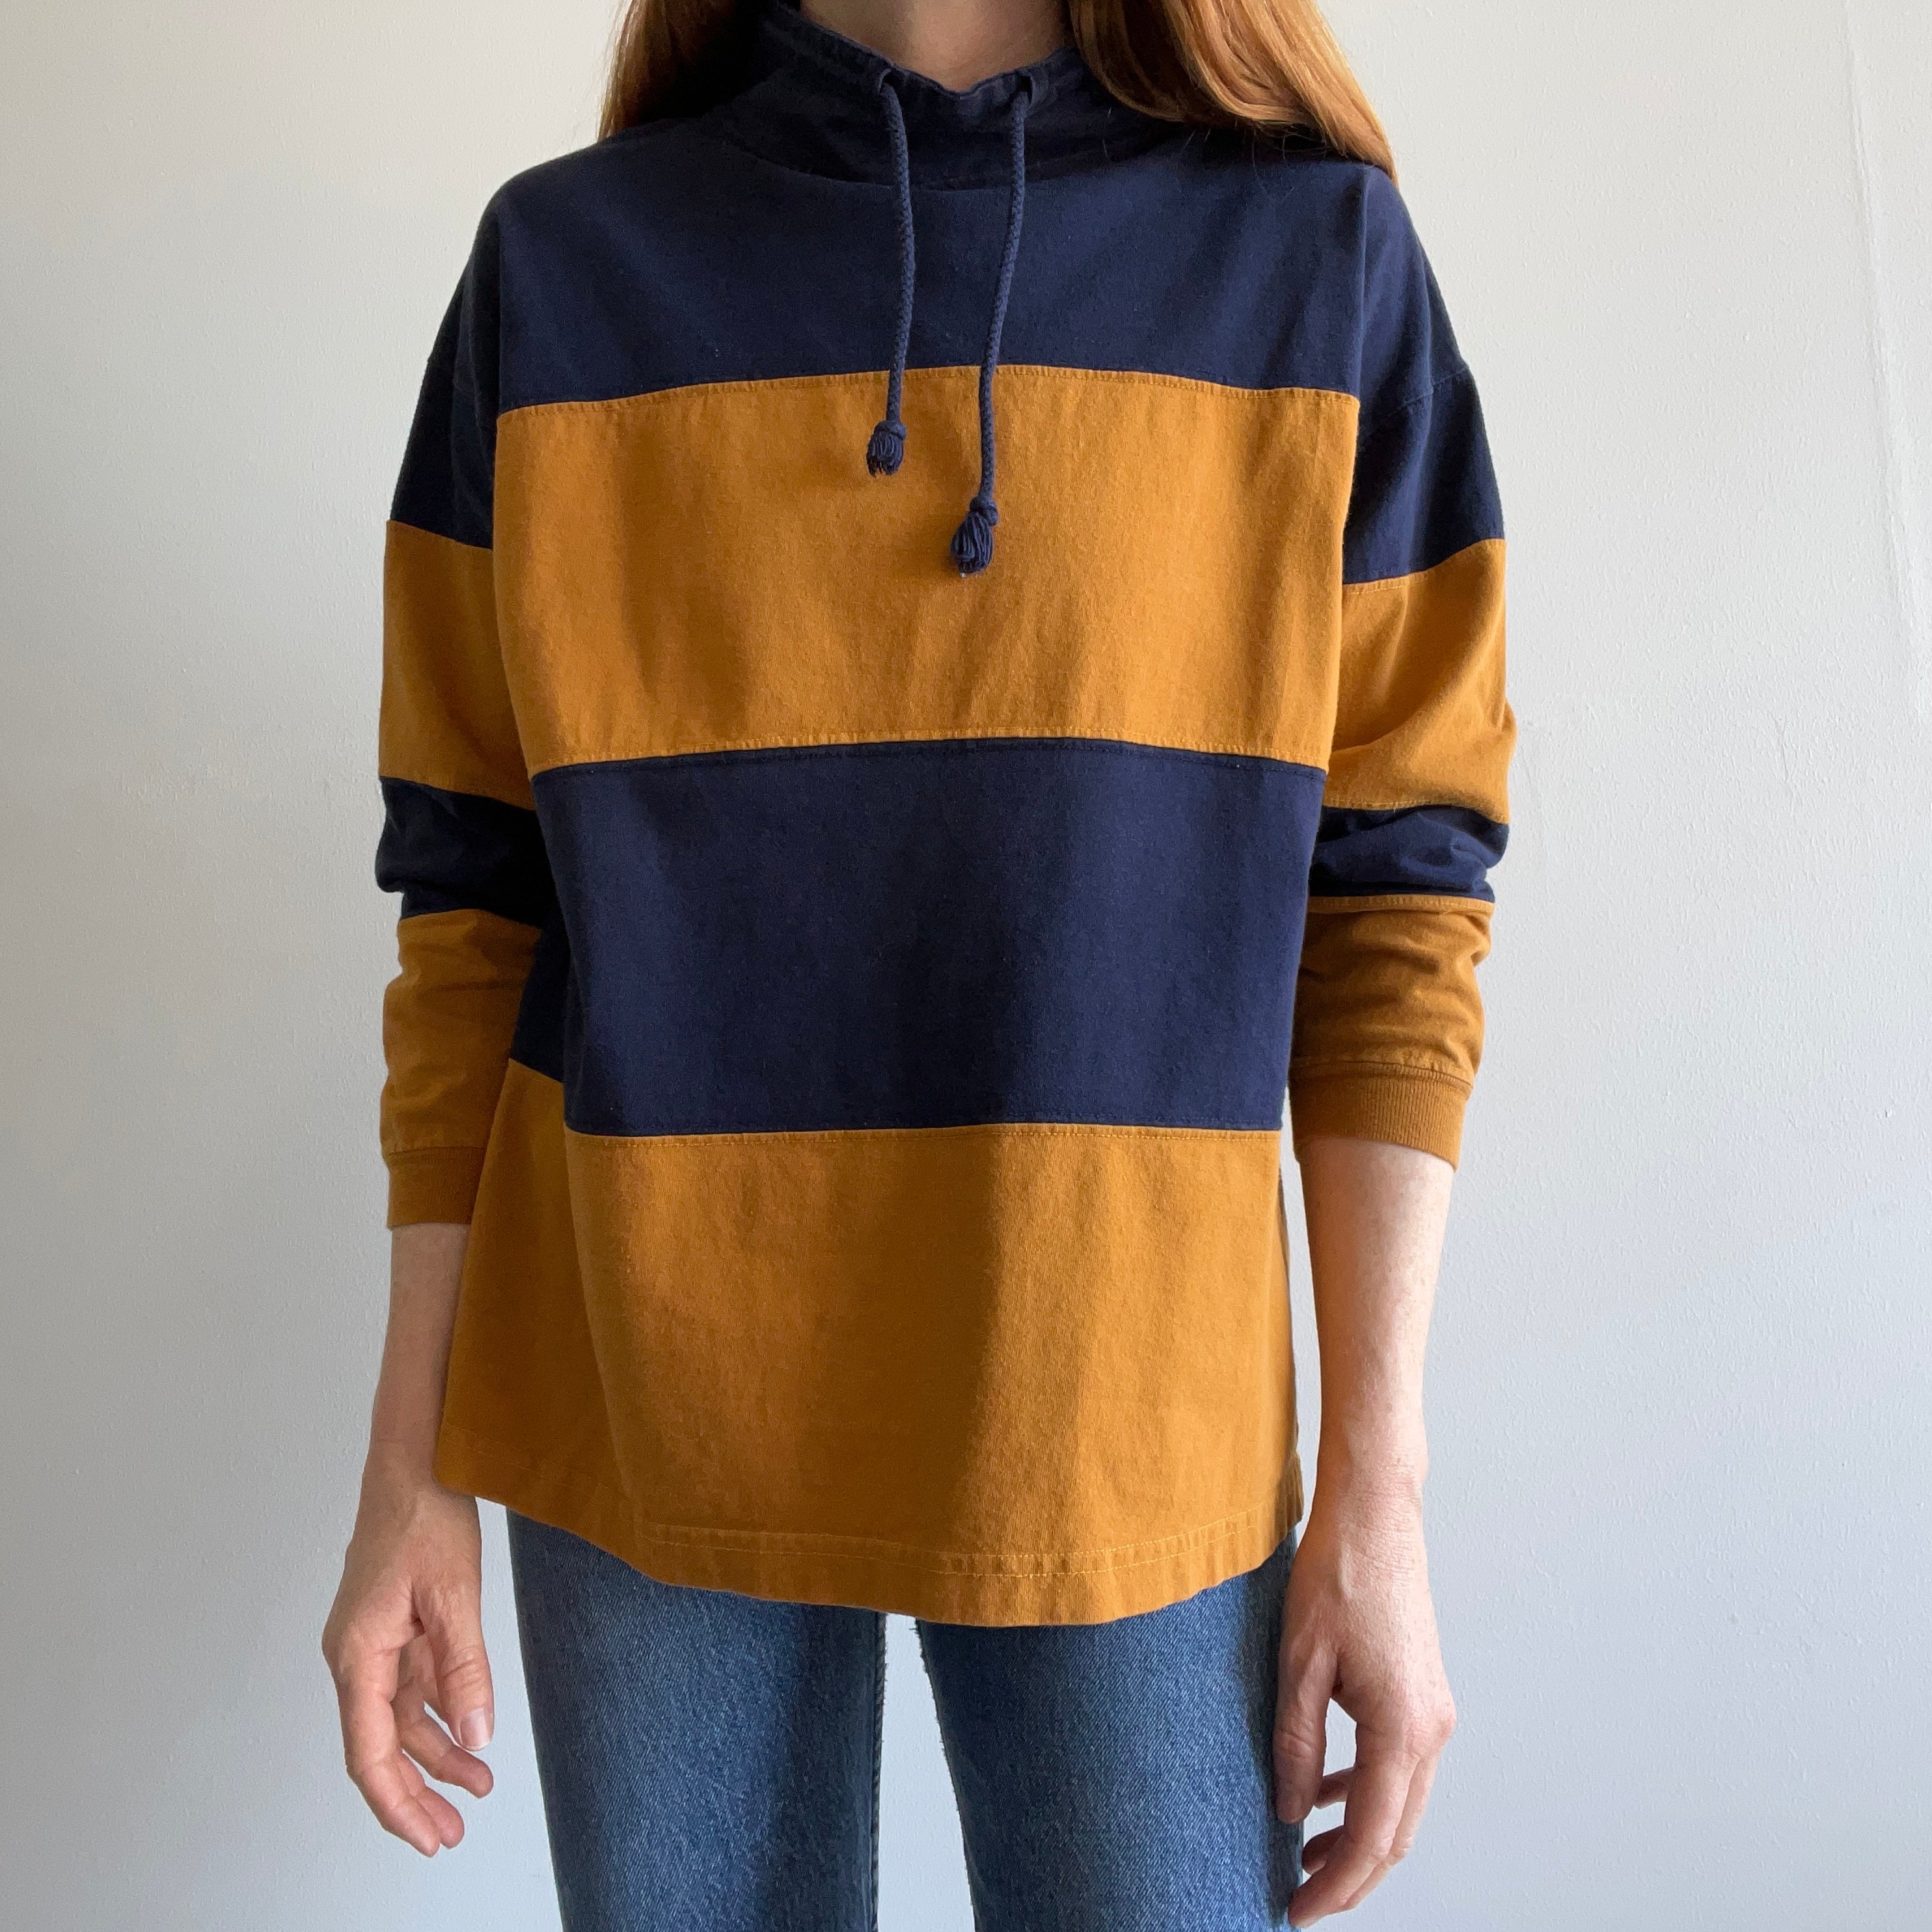 1990s Navy and (Mari)Gold Mock Neck Sweatshirt/Shirt